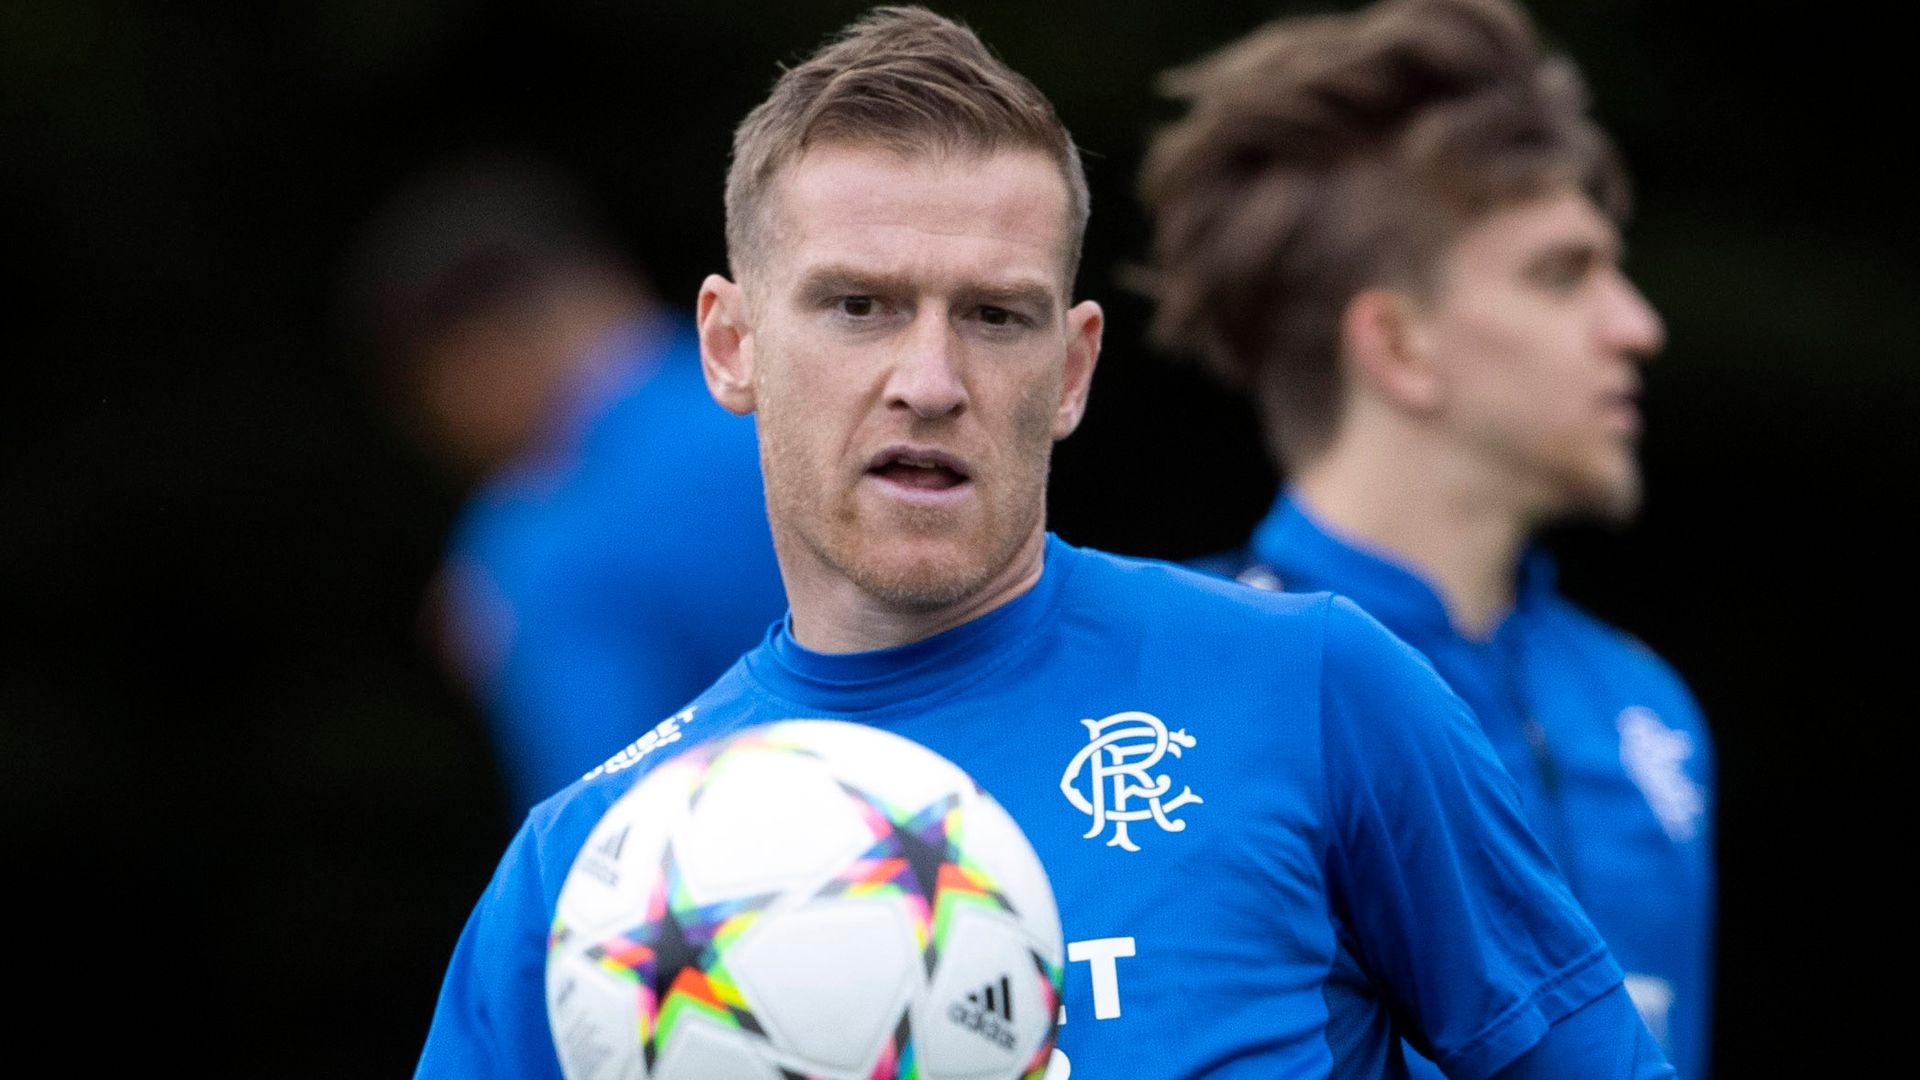 Rangers' Davis: I don't know if I'll play football again